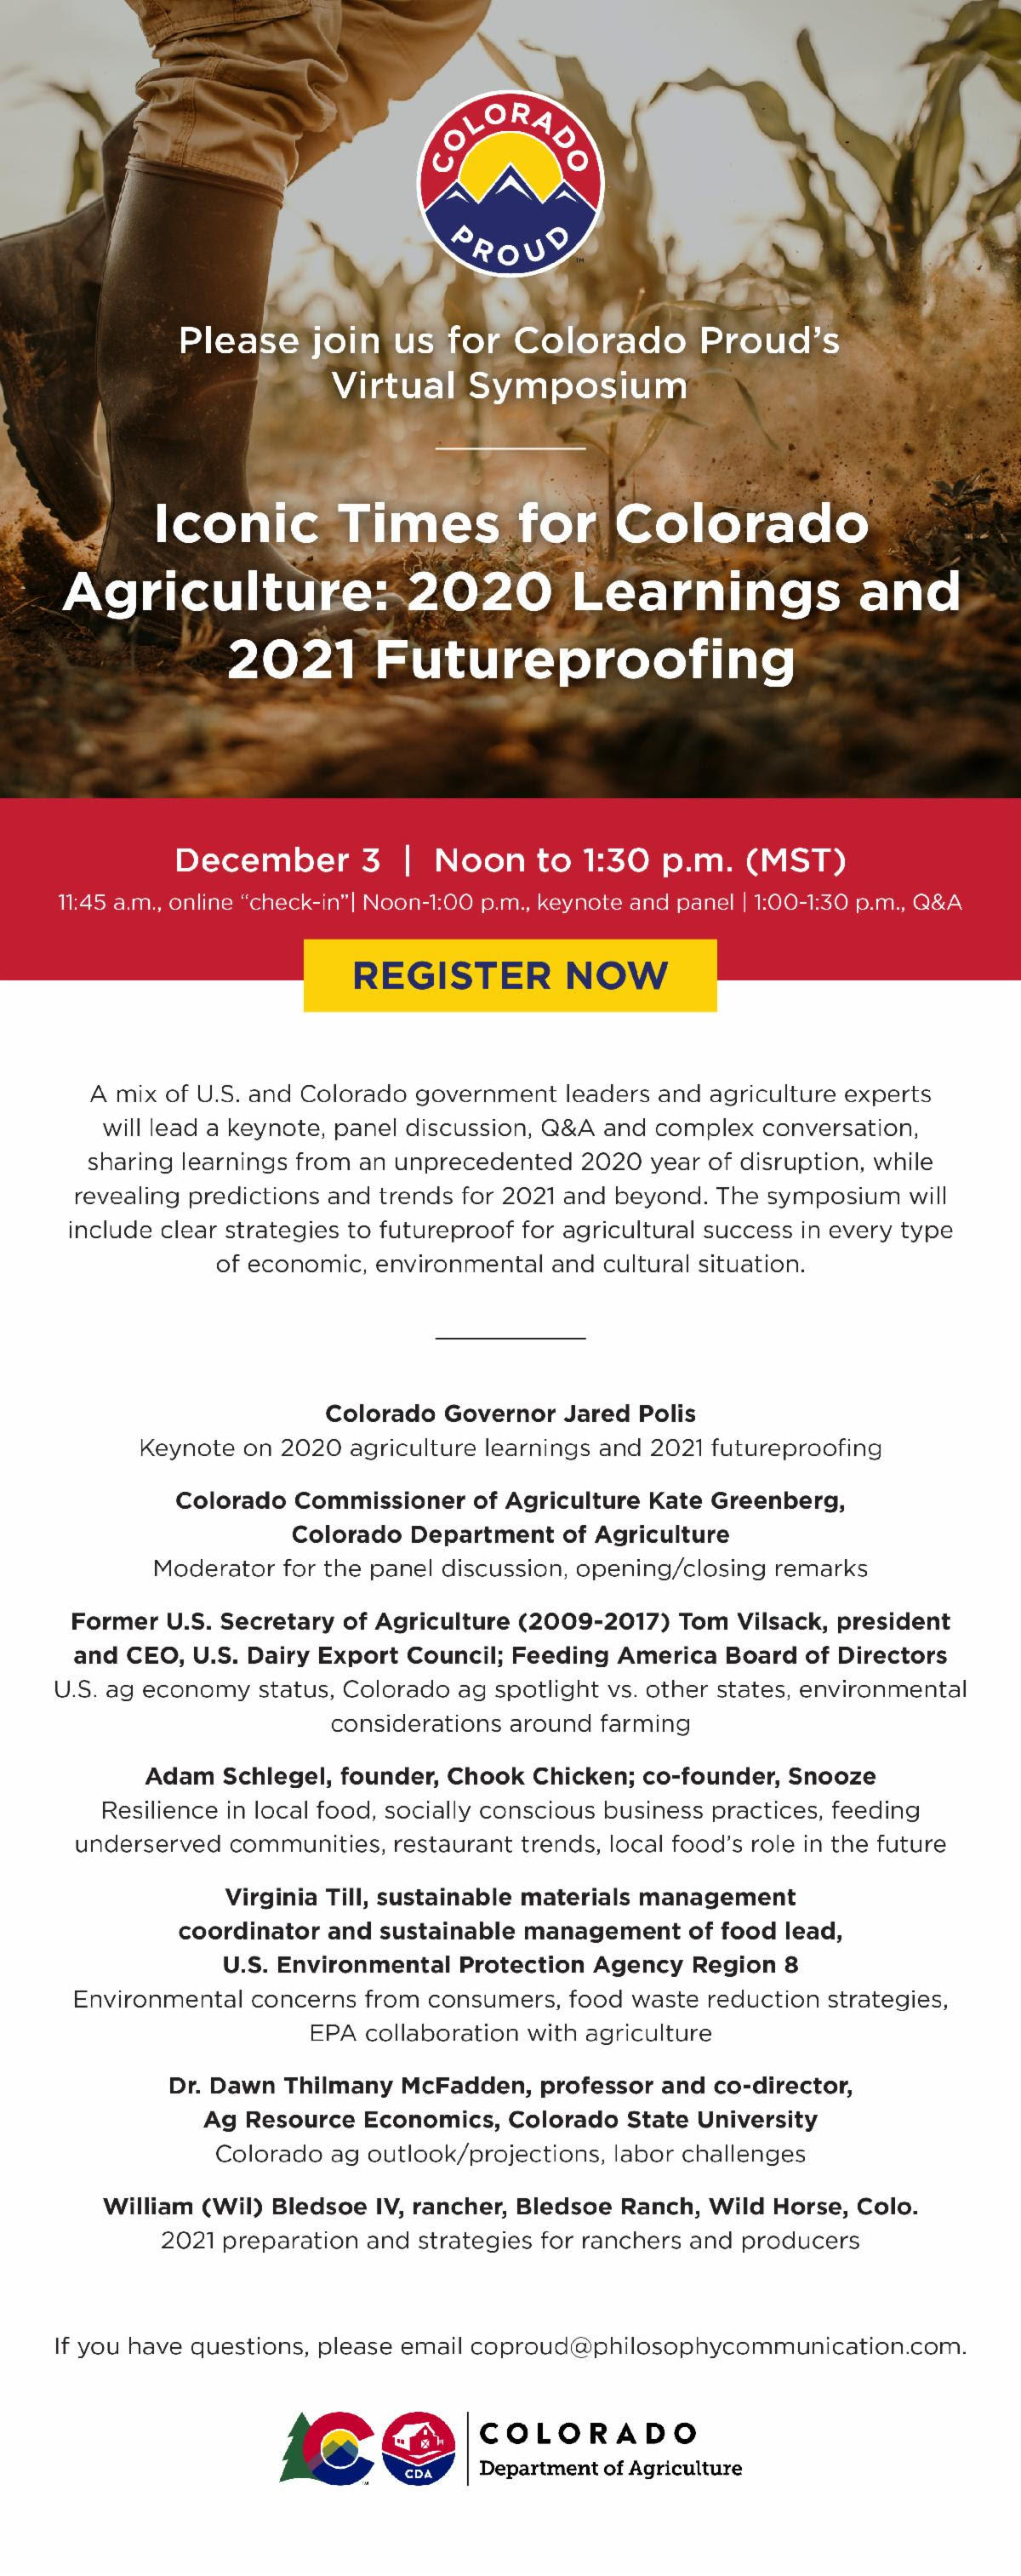 Colorado Proud Virtual Symposium link to register